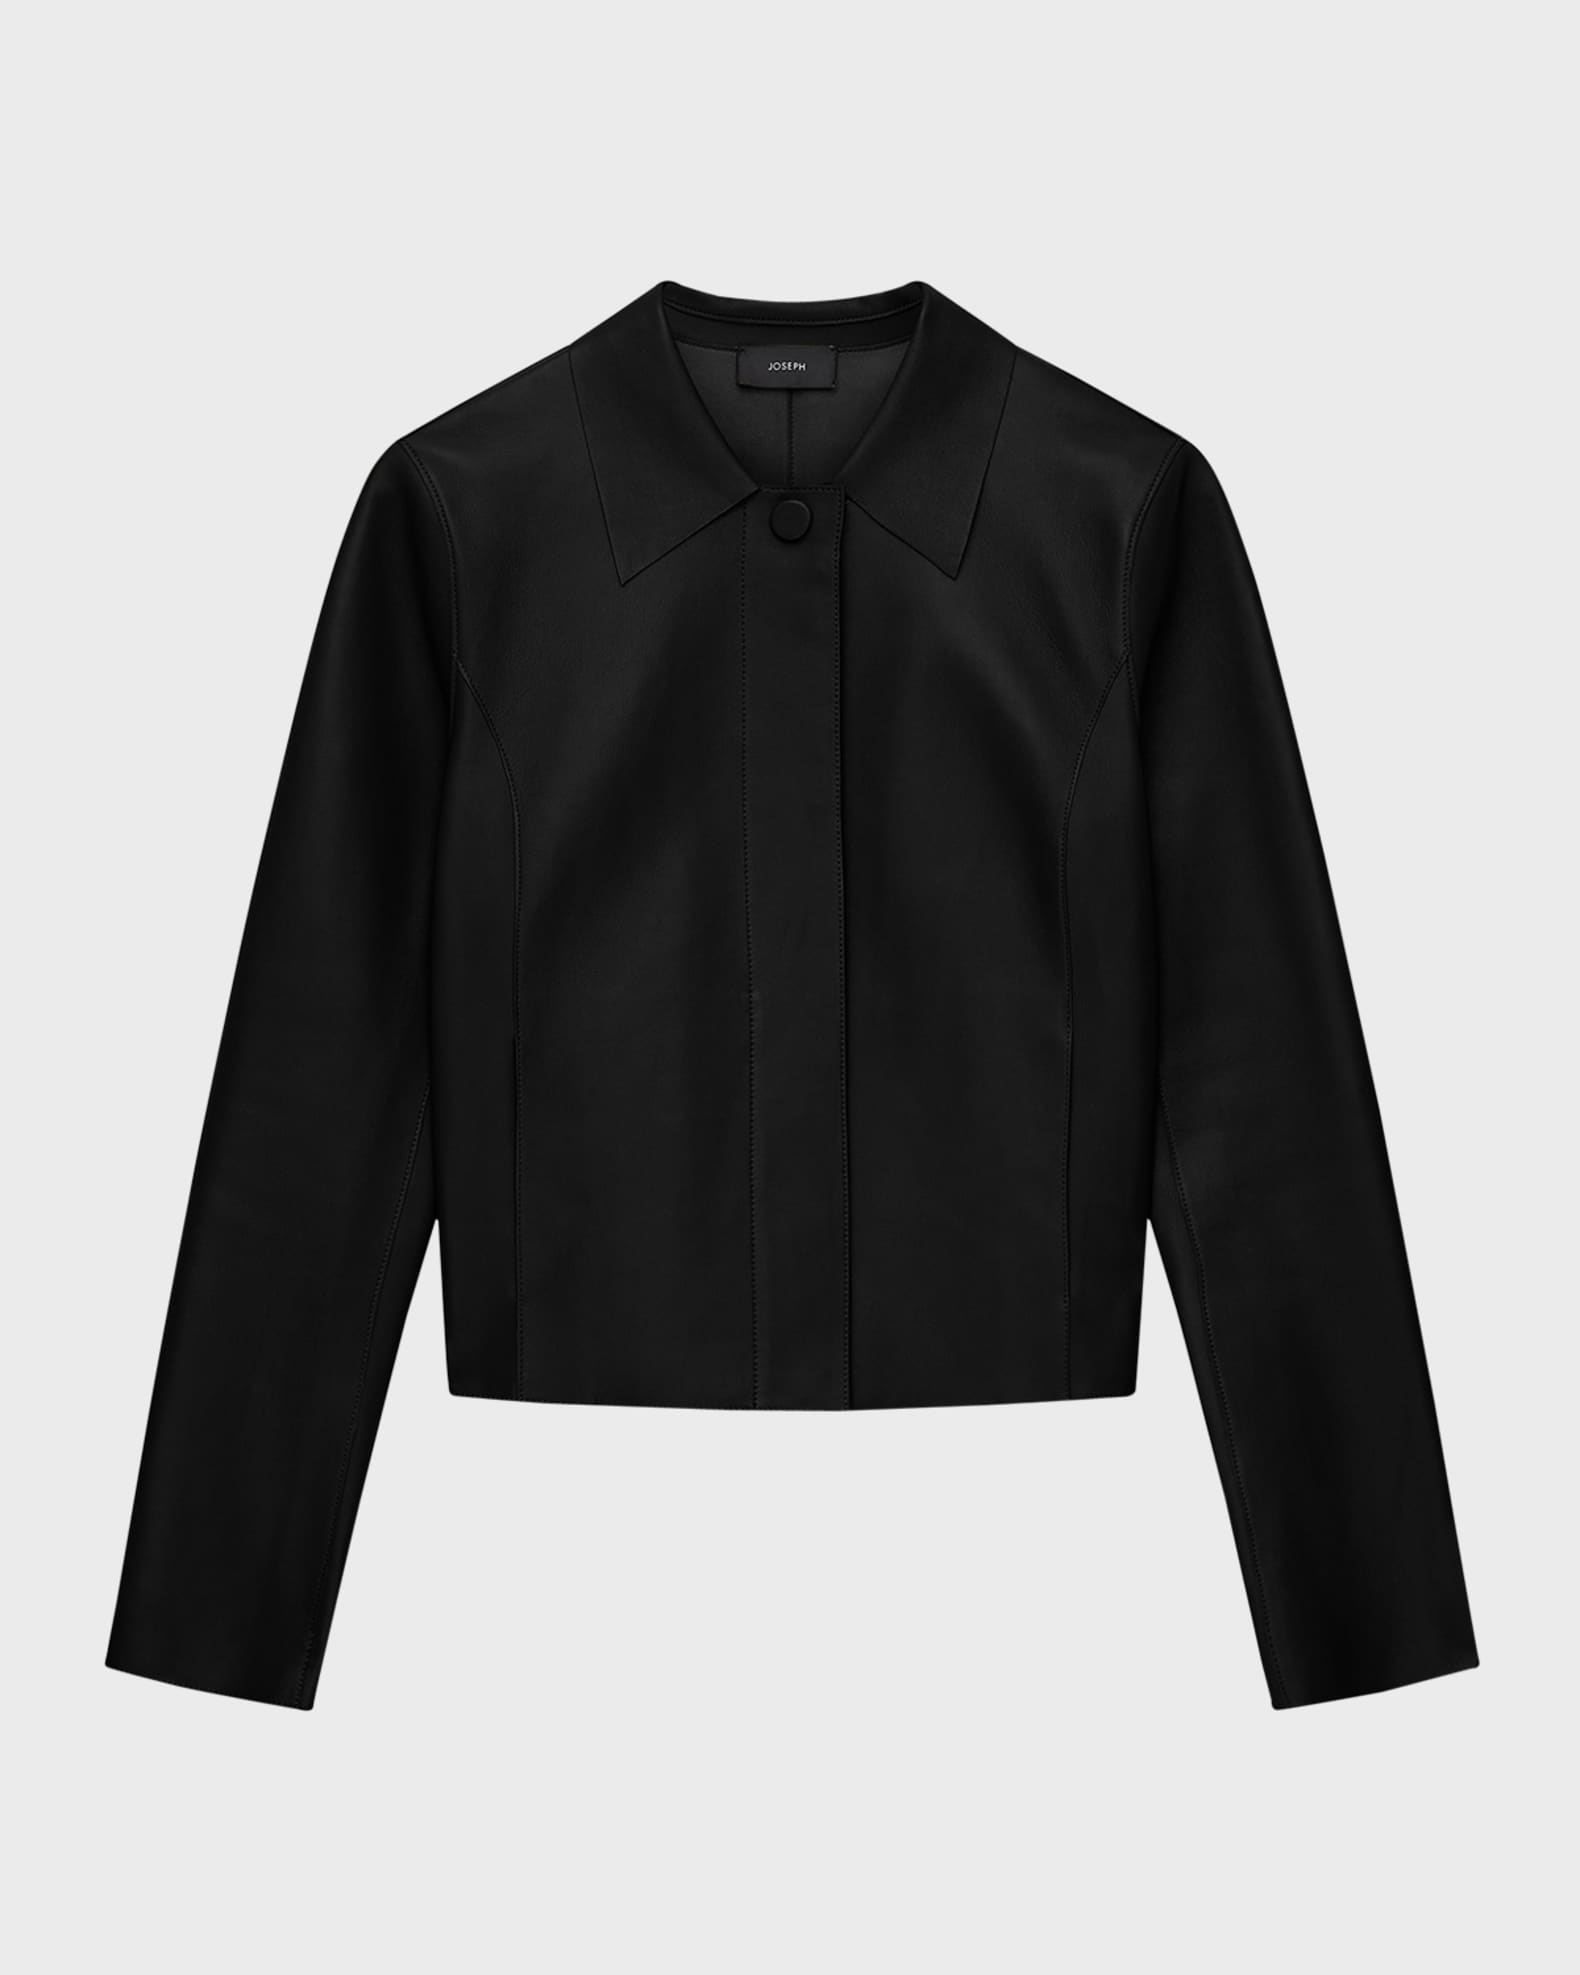 Joseph Jose Snap-Front Bonded Leather Jacket | Neiman Marcus